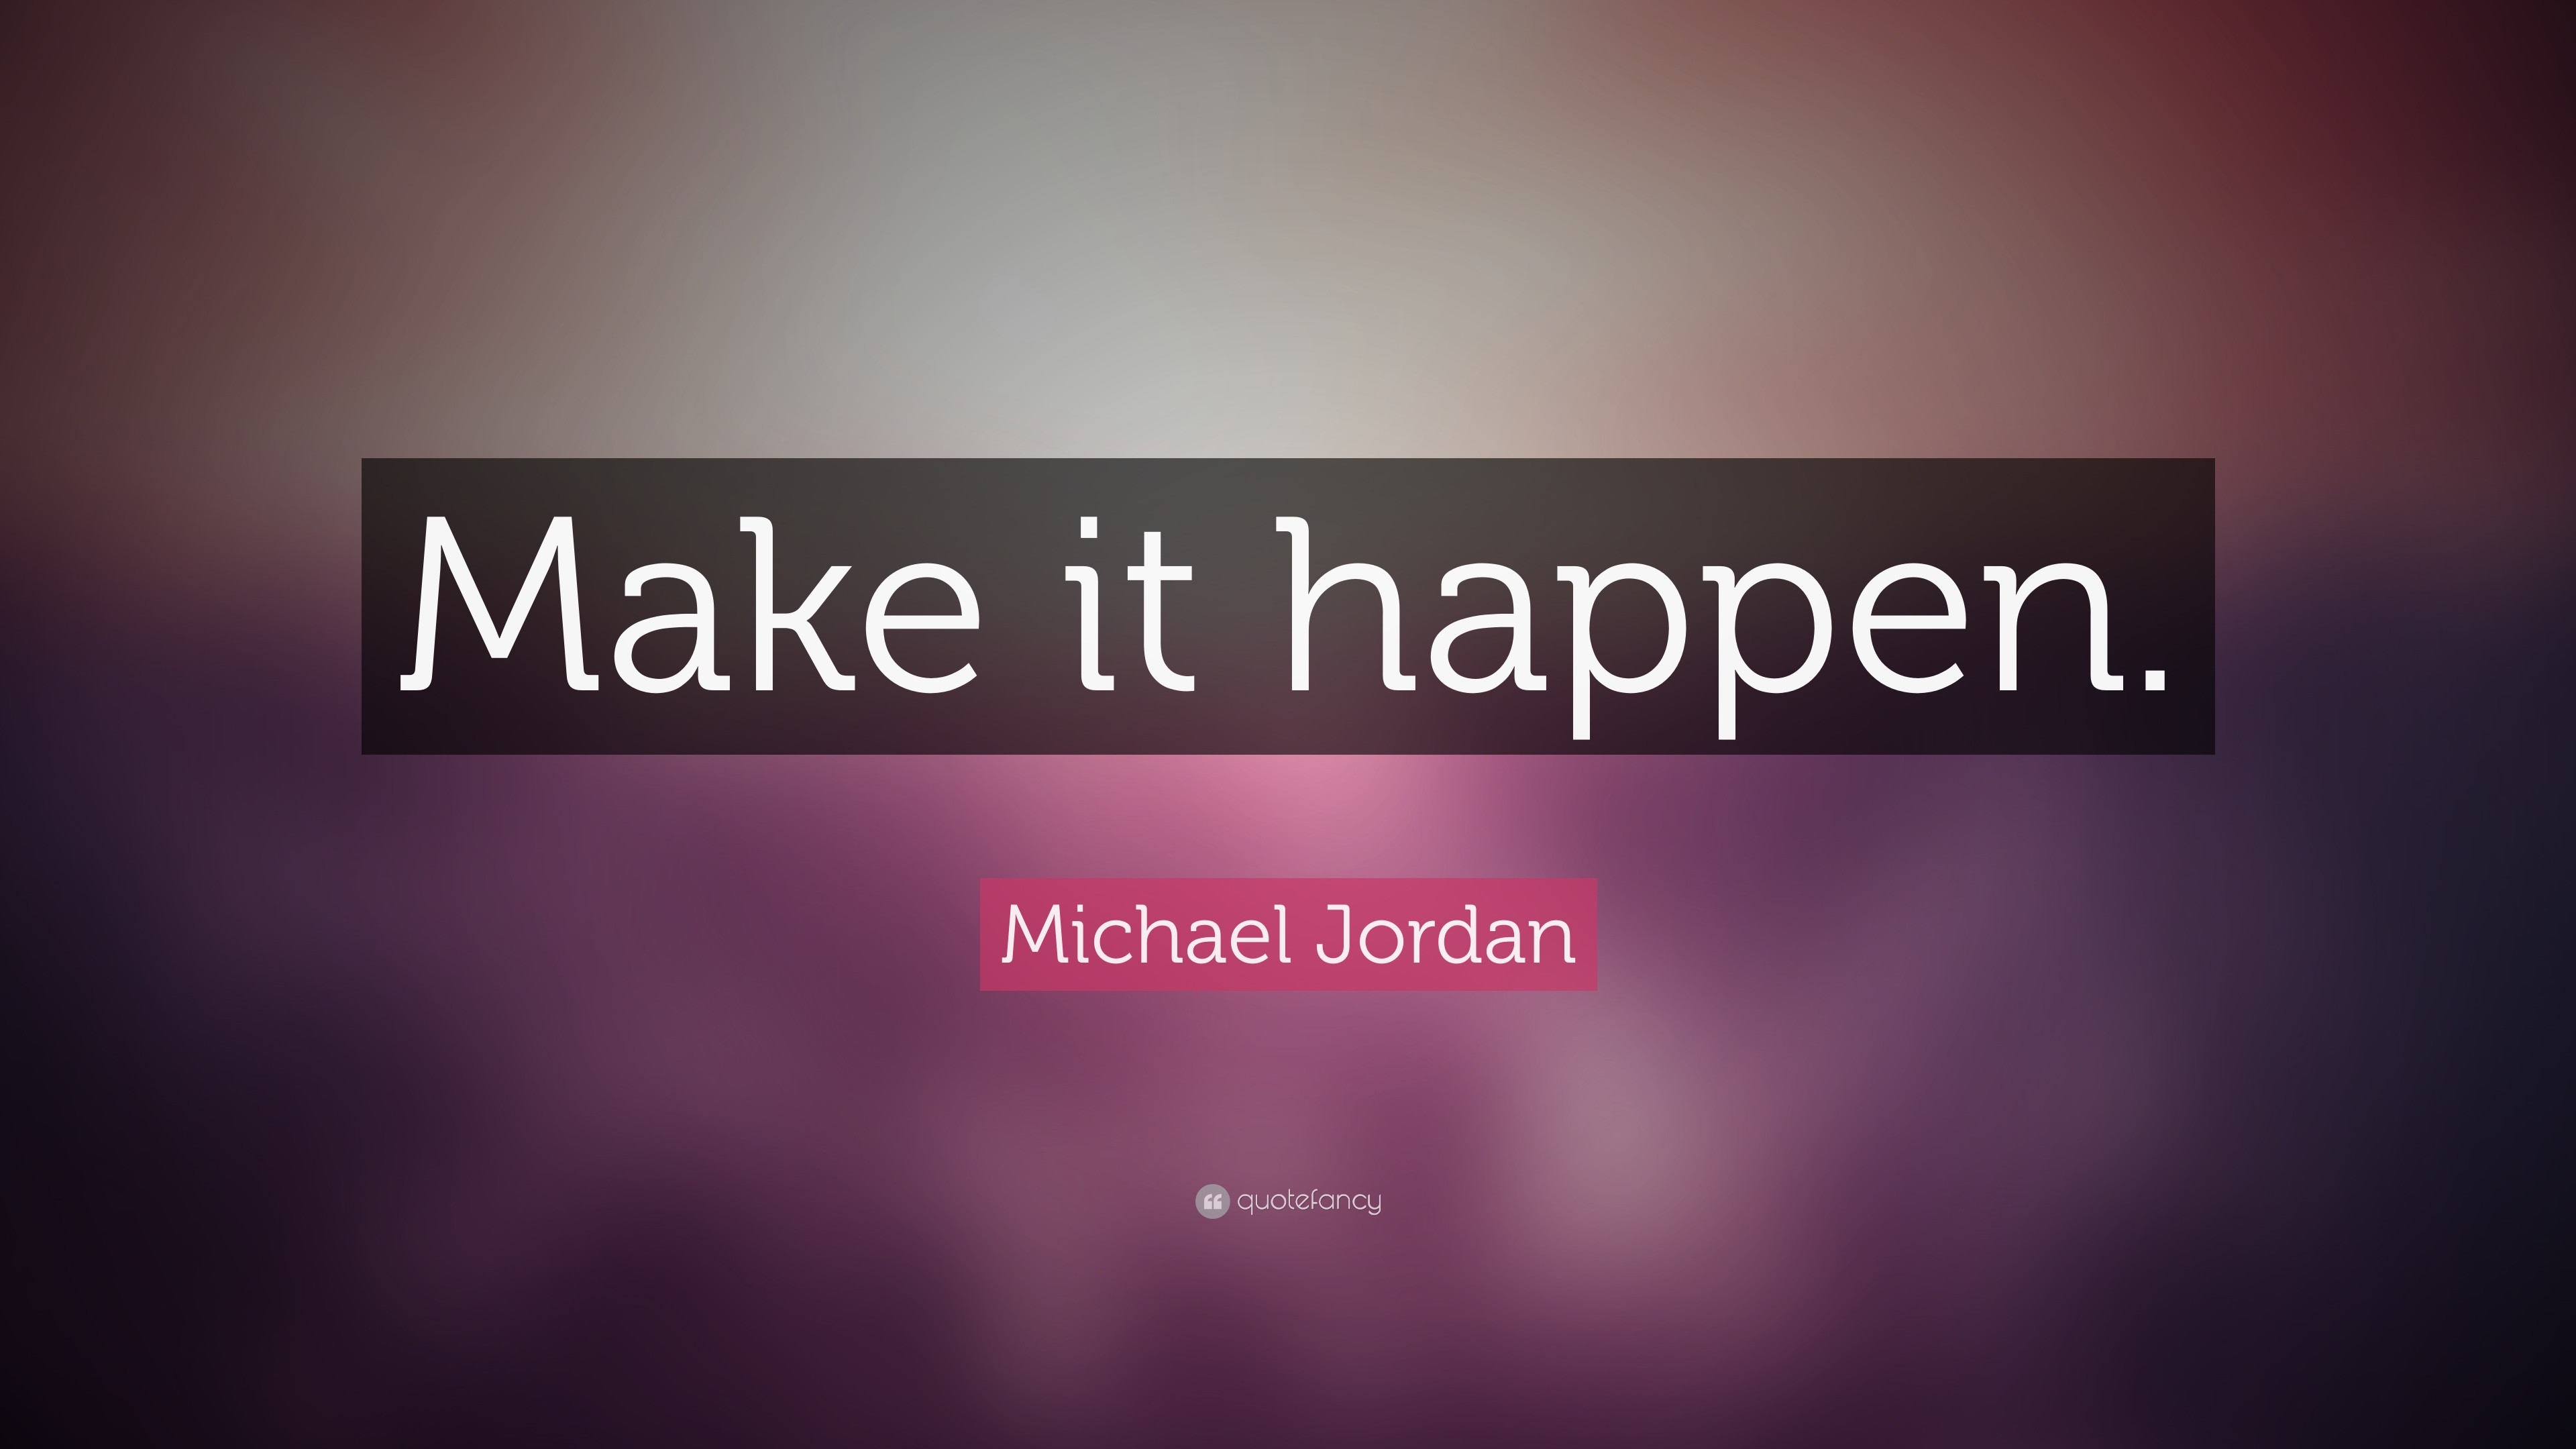 3840x2160 Michael Jordan Quote: “Make it happen.”